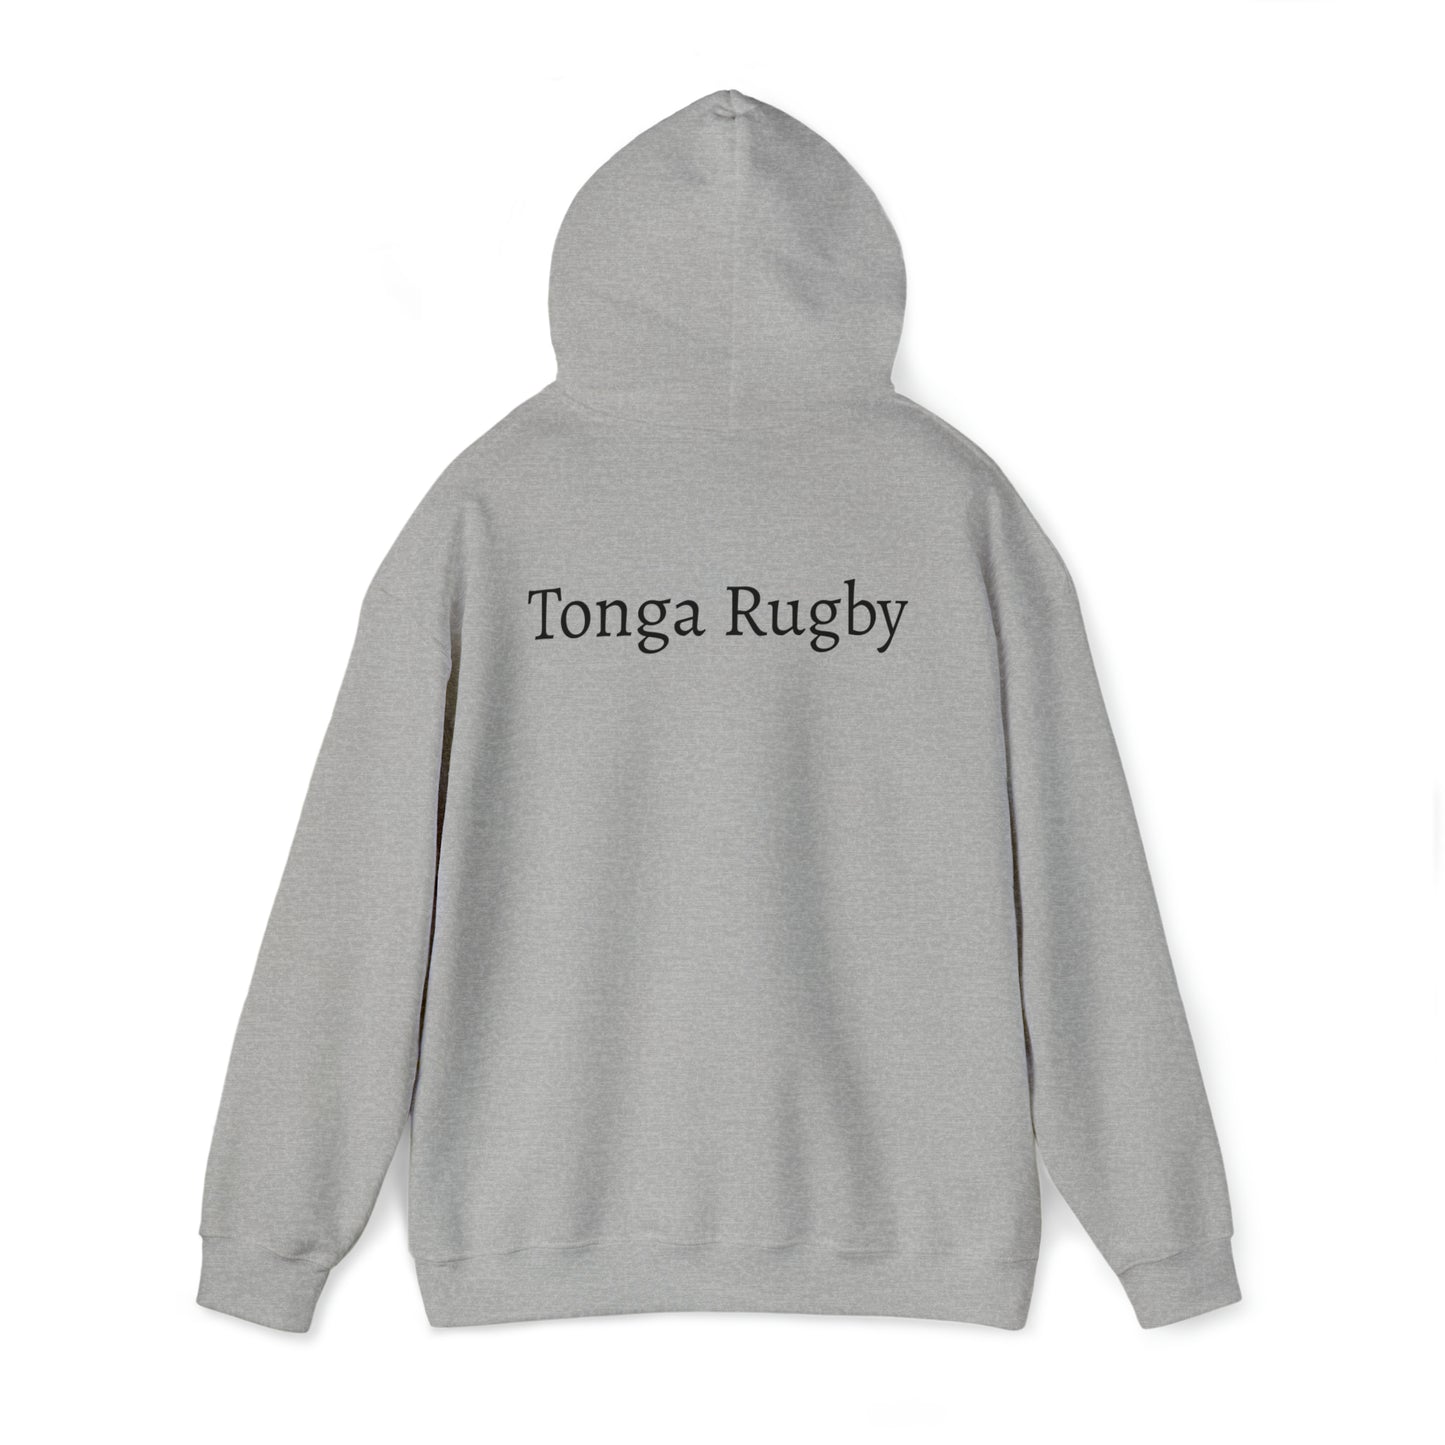 Ready Tonga - light hoodies